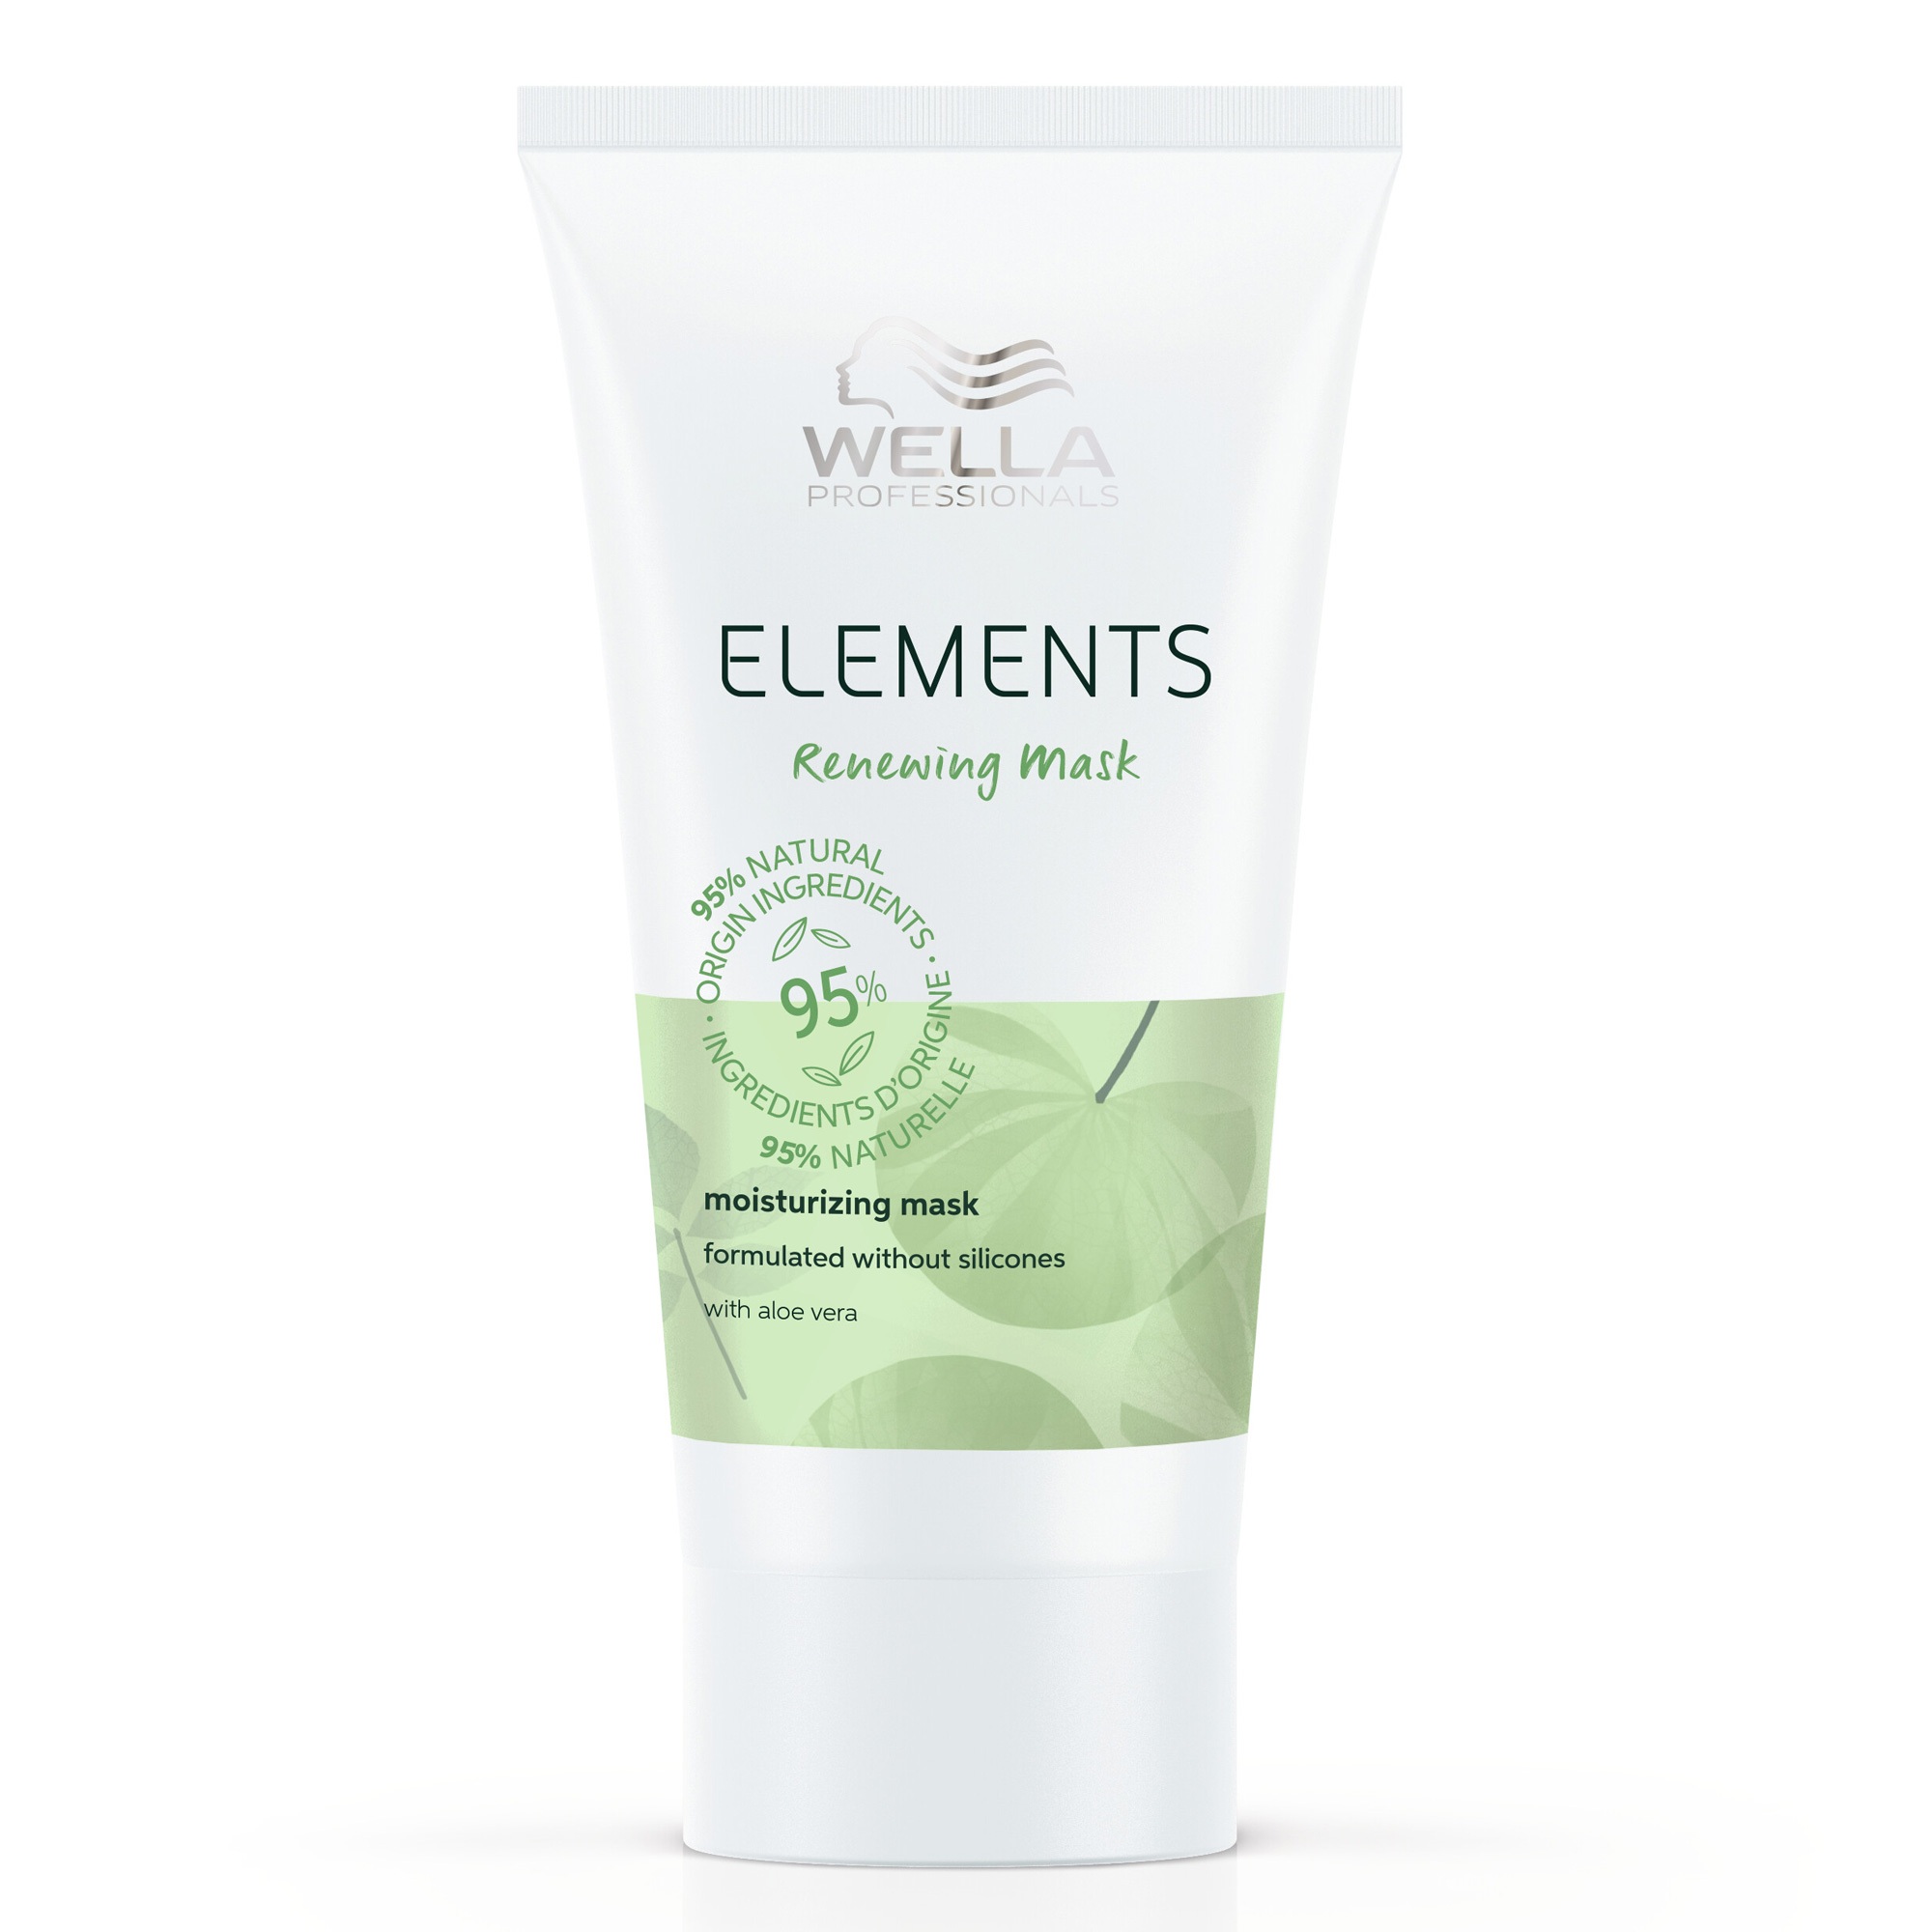 Wella Elements Renewing Mask 1.01oz